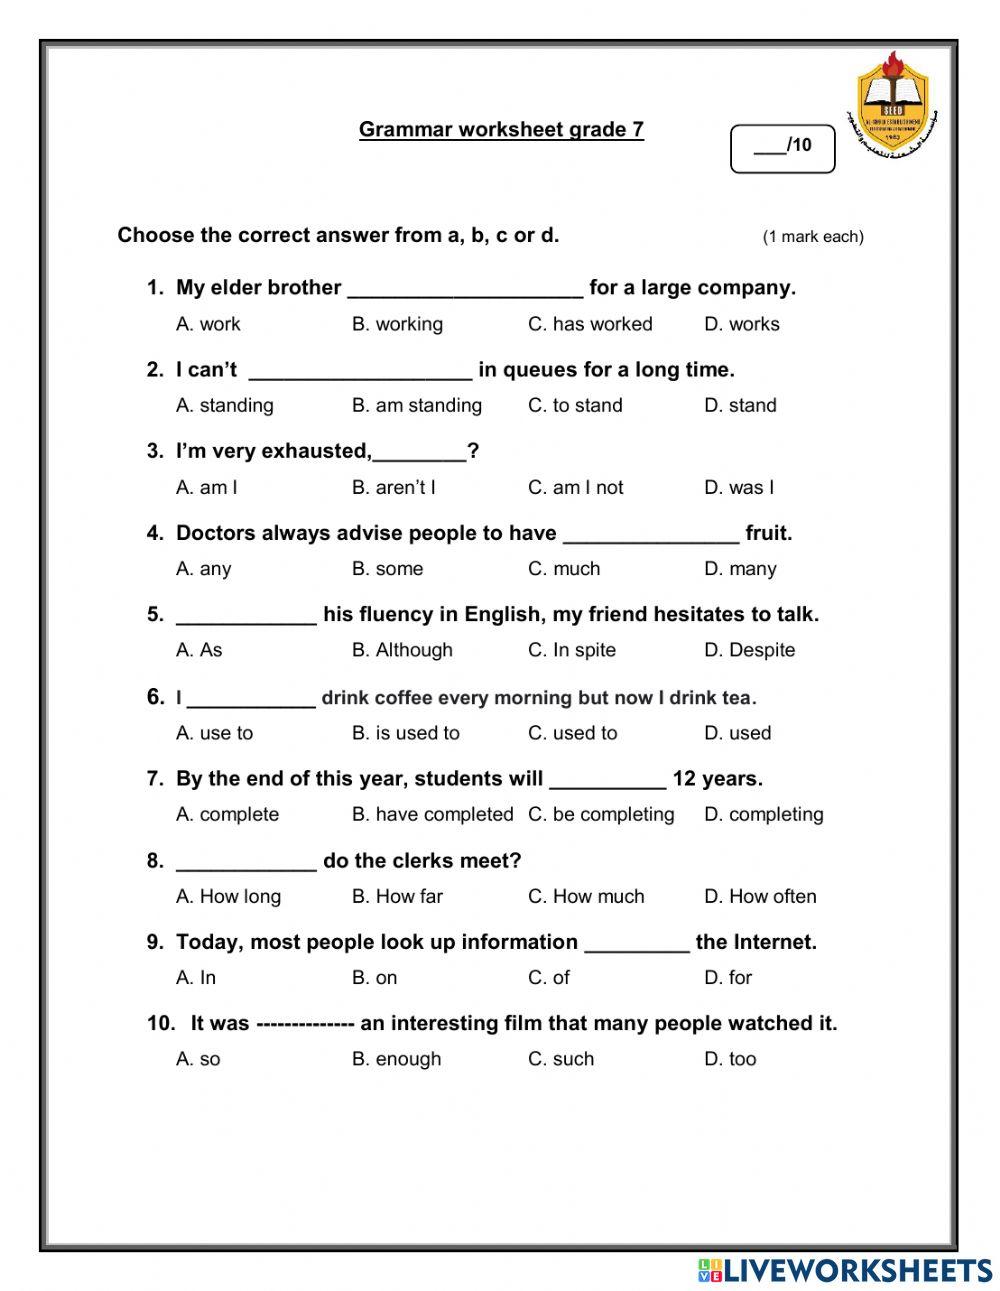 Grammar worksheet grade 7